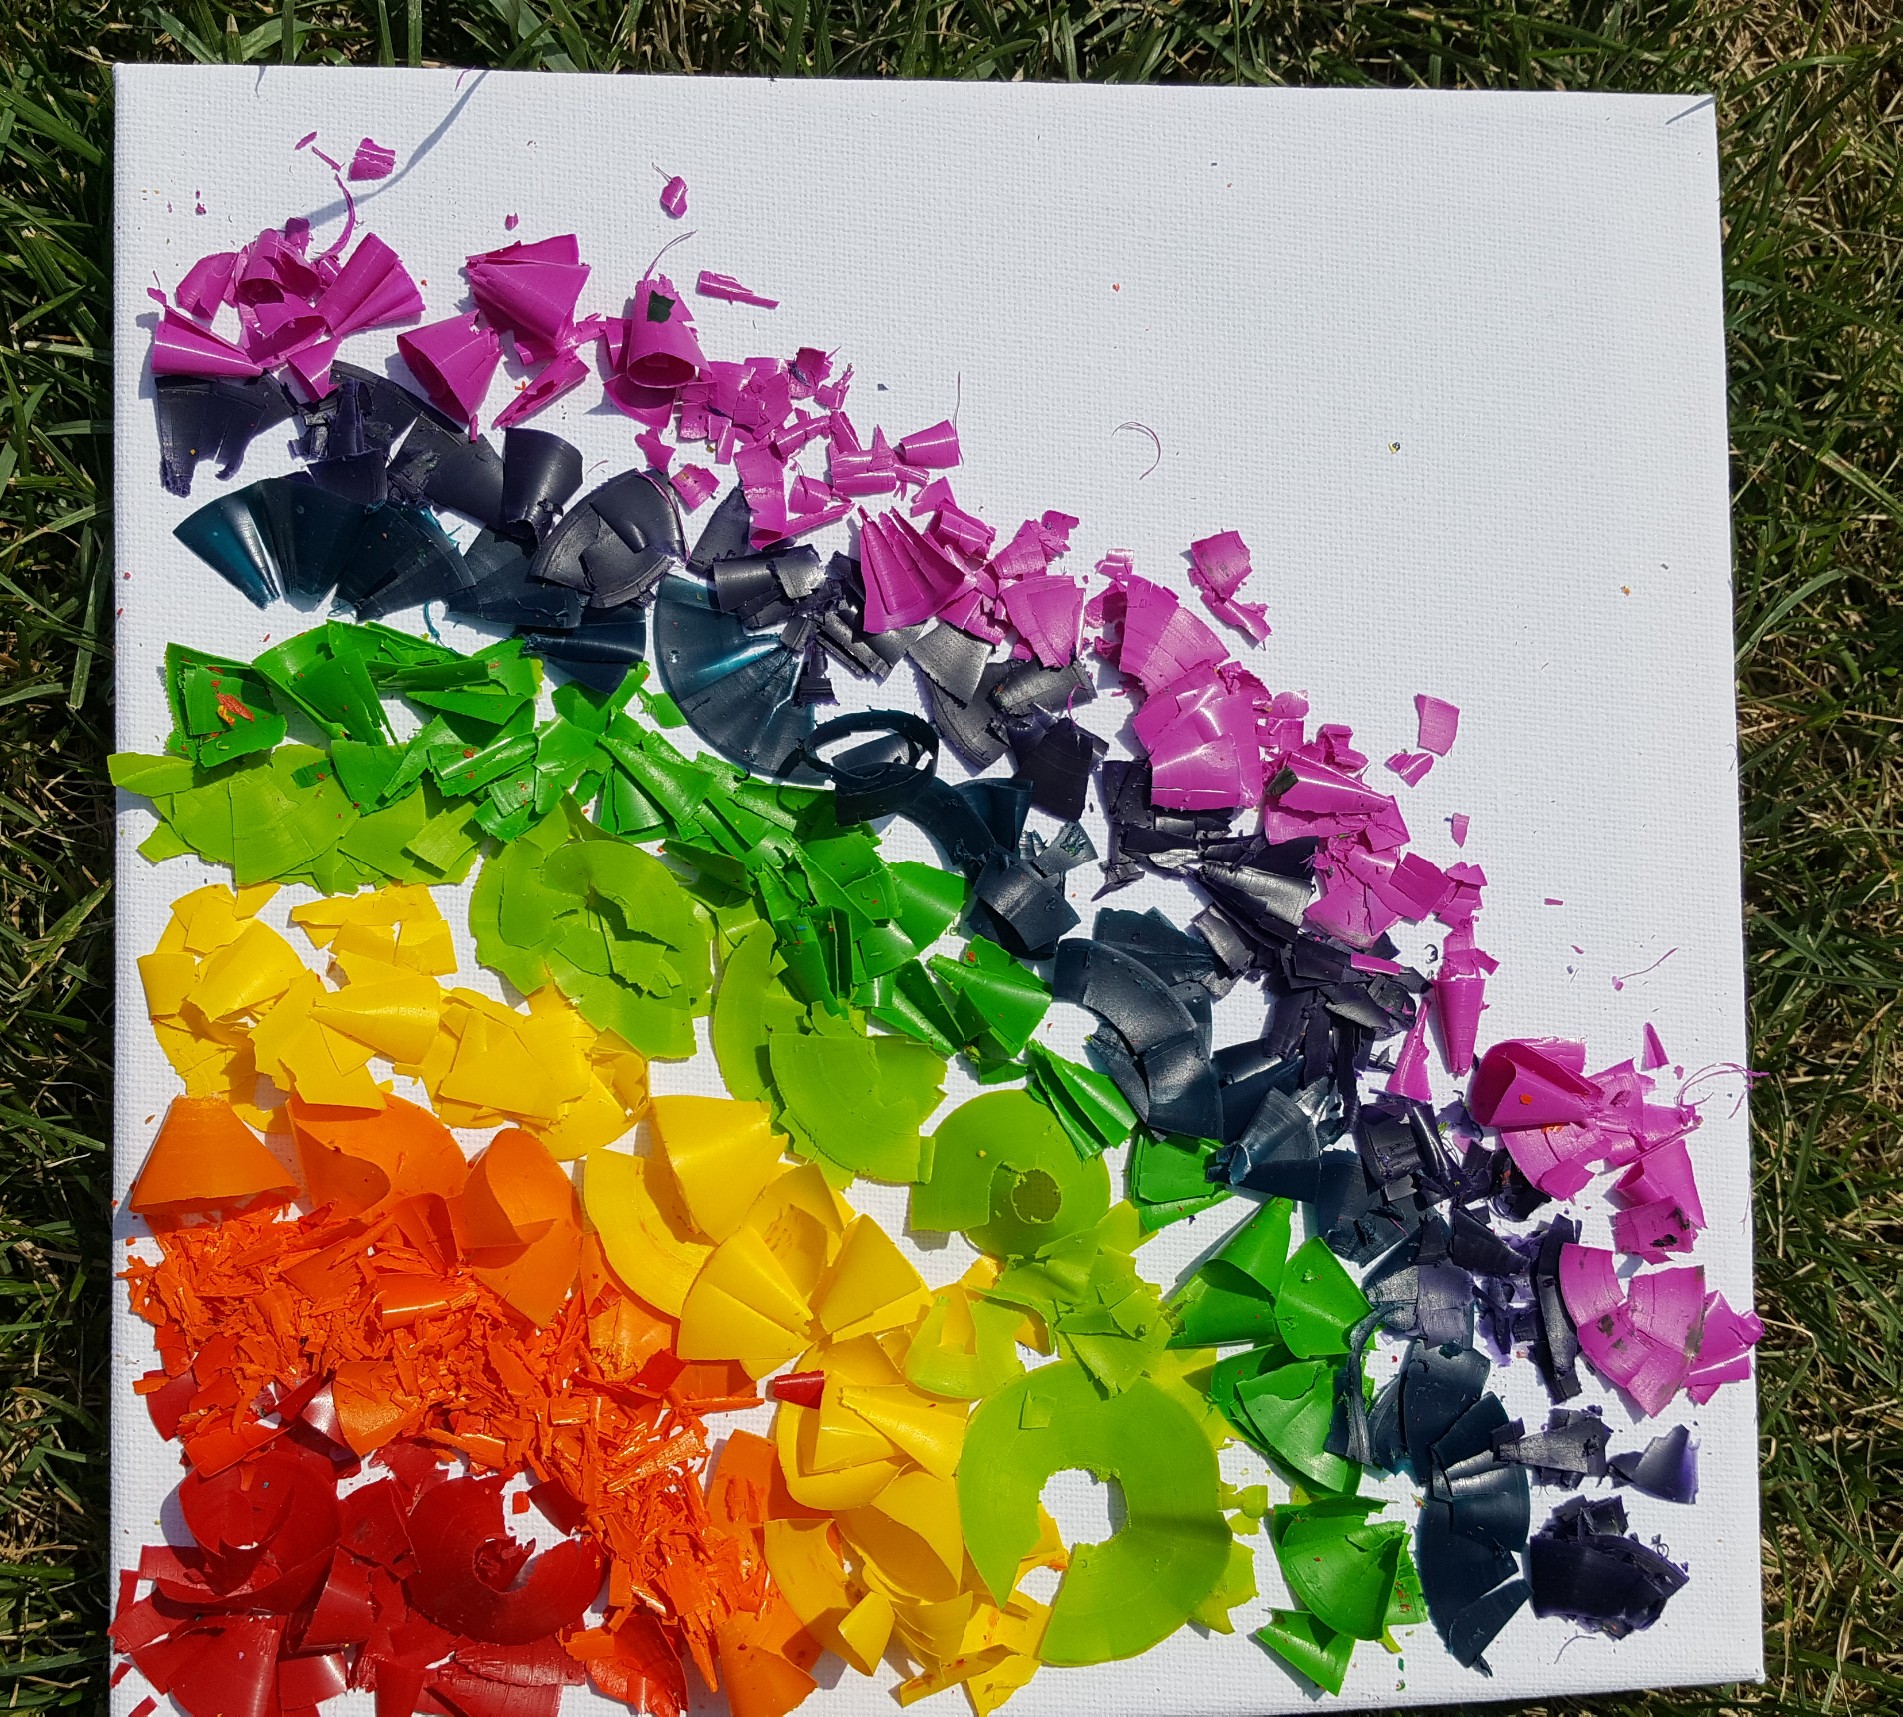 Melted Crayon Art - Hands-On Teaching Ideas